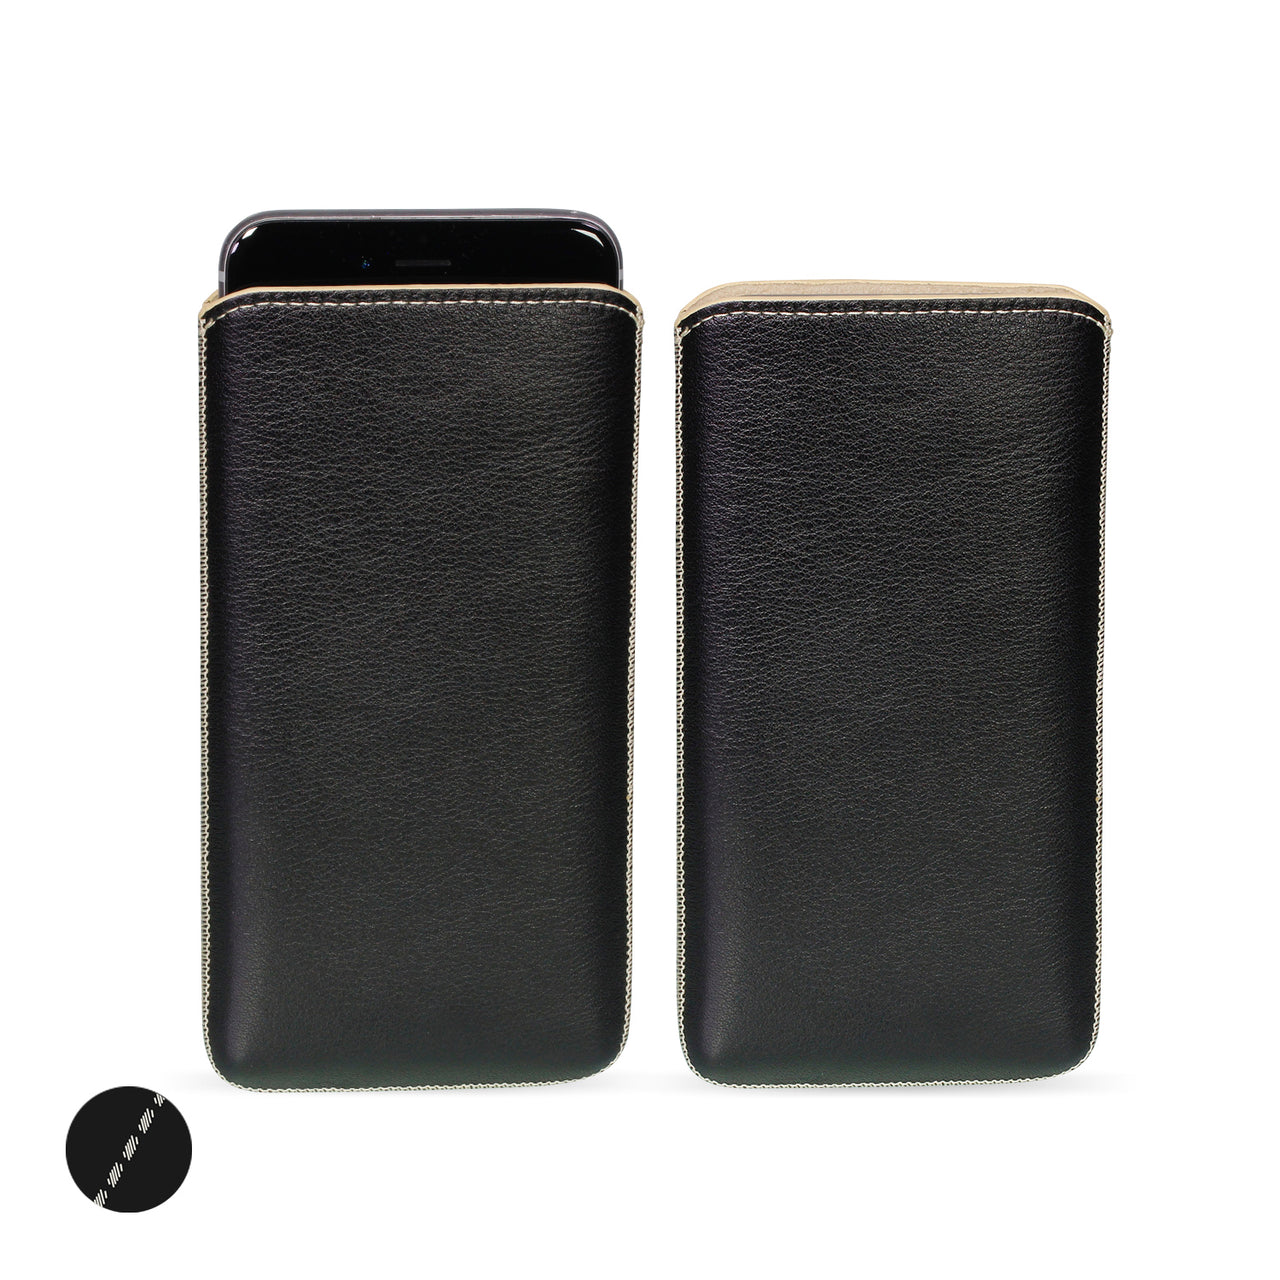 Google Pixel 2 XL Genuine Leather Pouch Sleeve Case | Artisanpouch